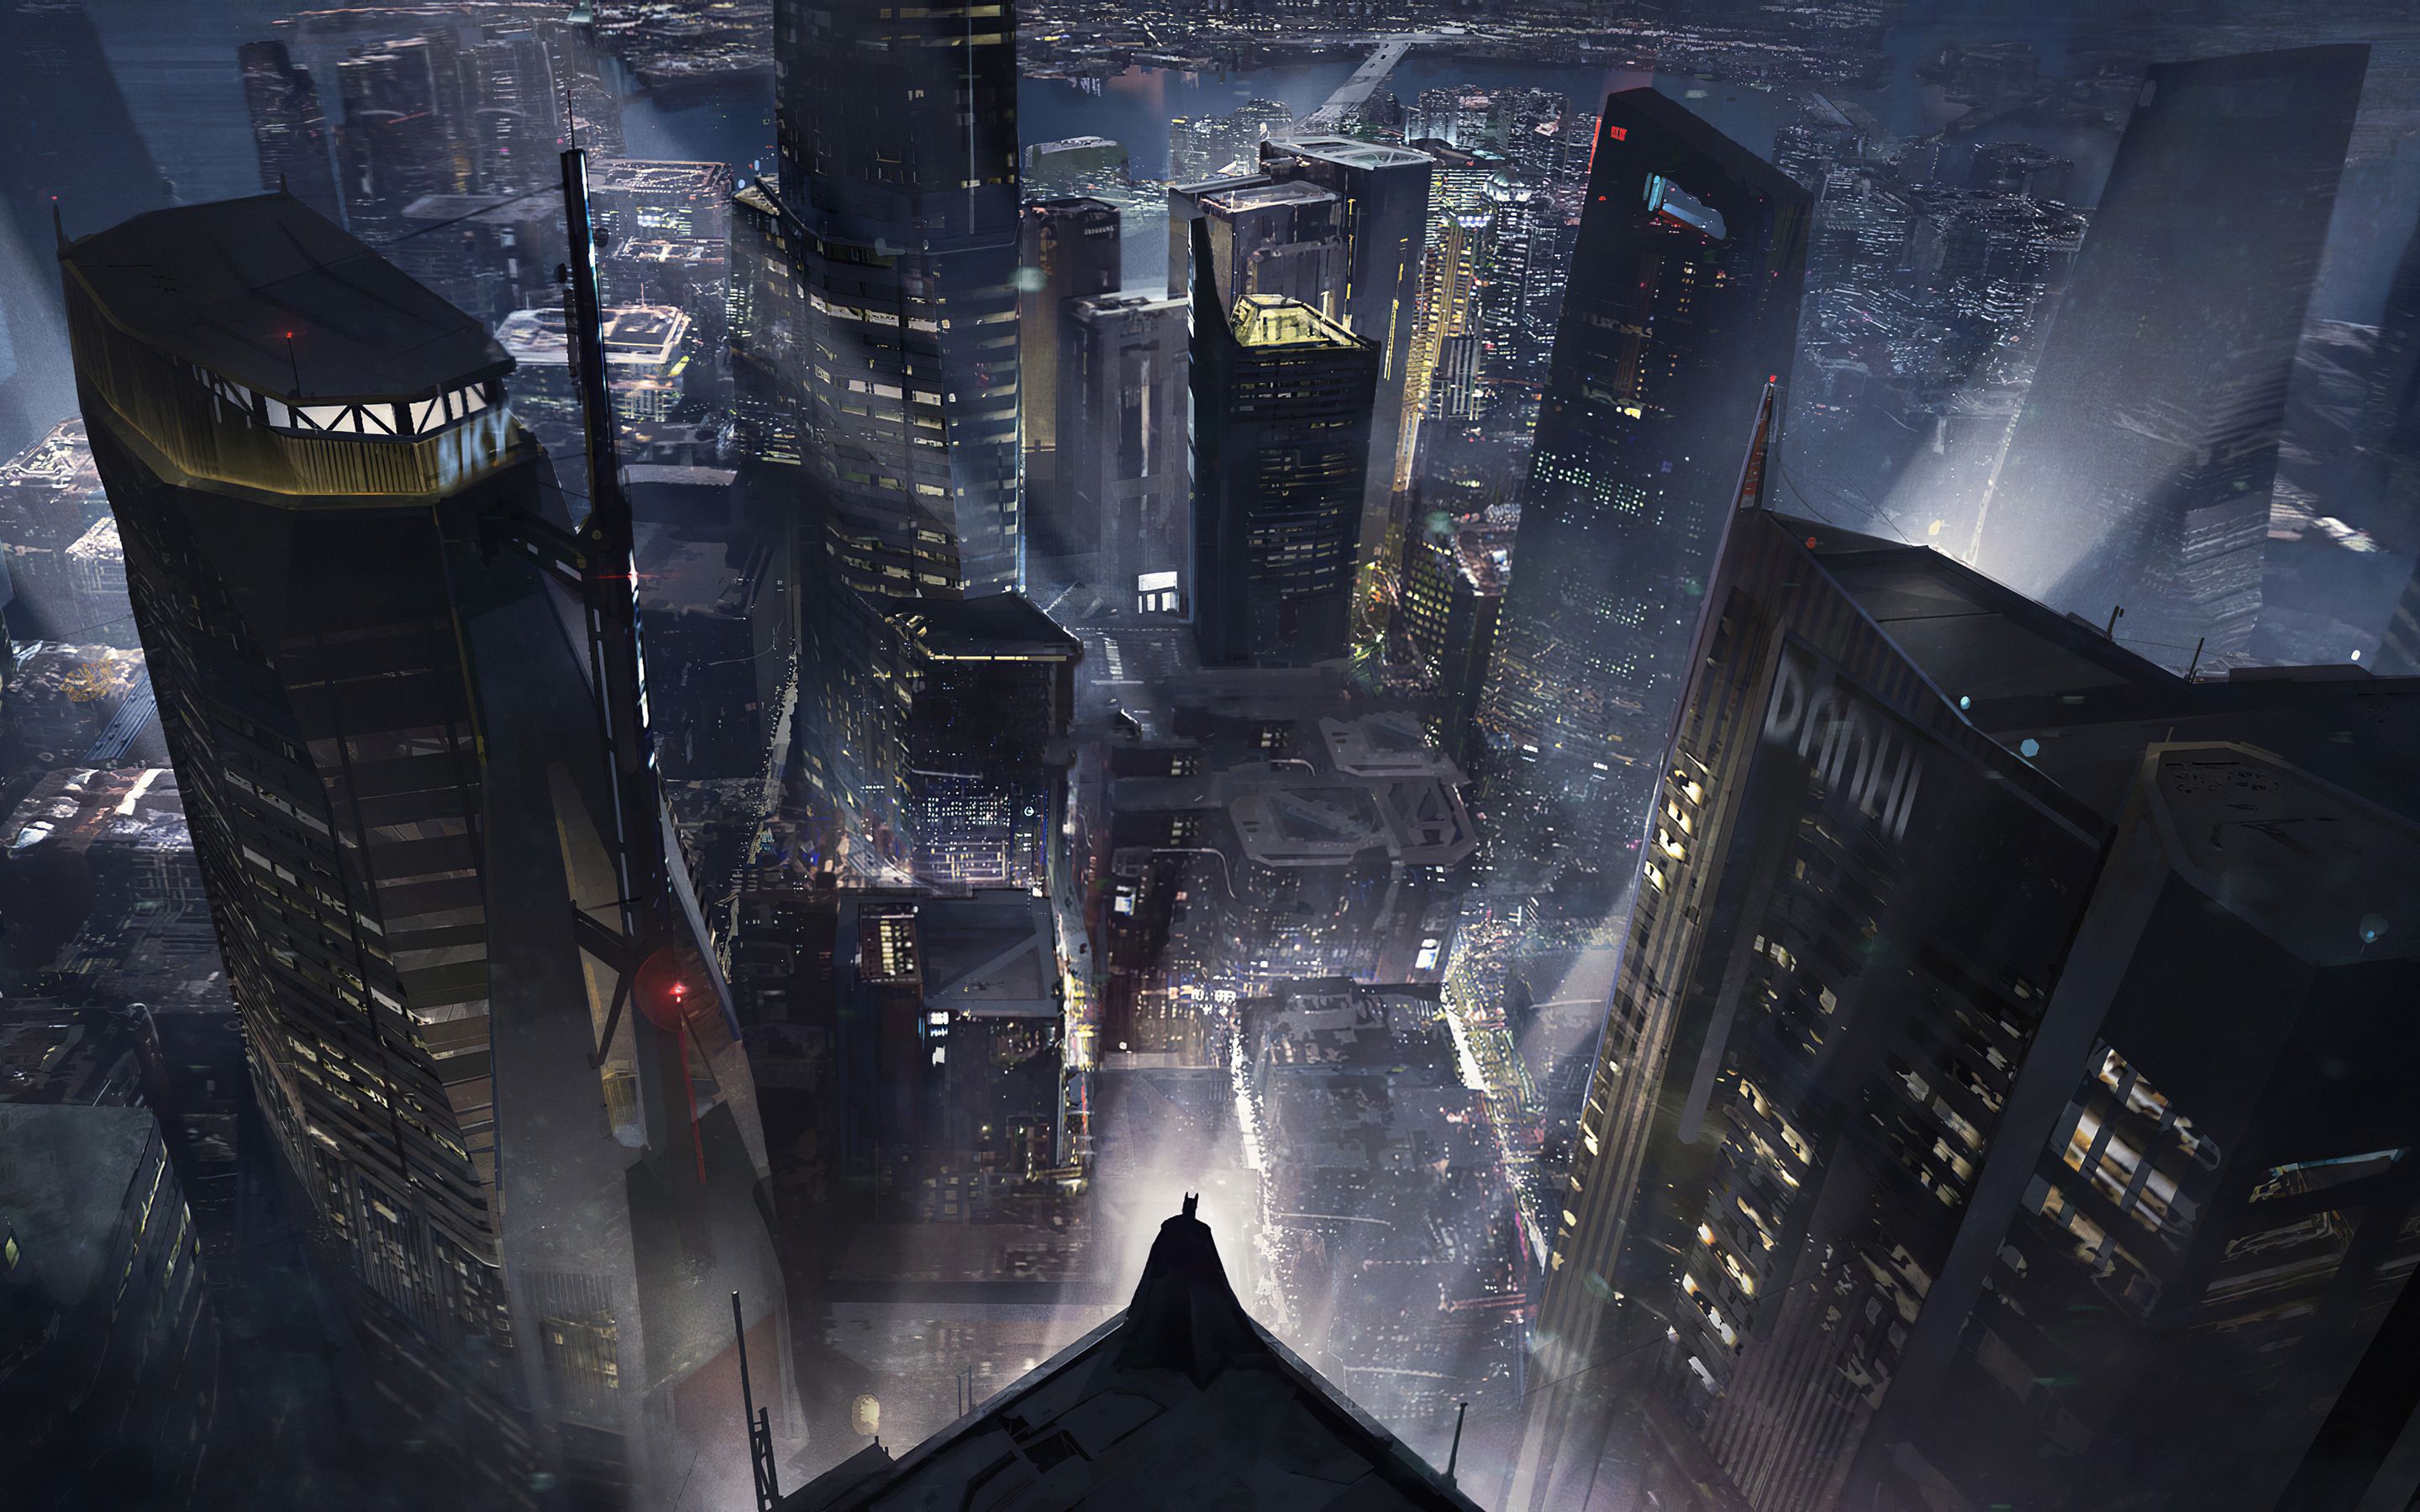 Batman Gotham City 4k New Macbook Pro Retina HD 4k Wallpaper, Image, Background, Photo and Picture